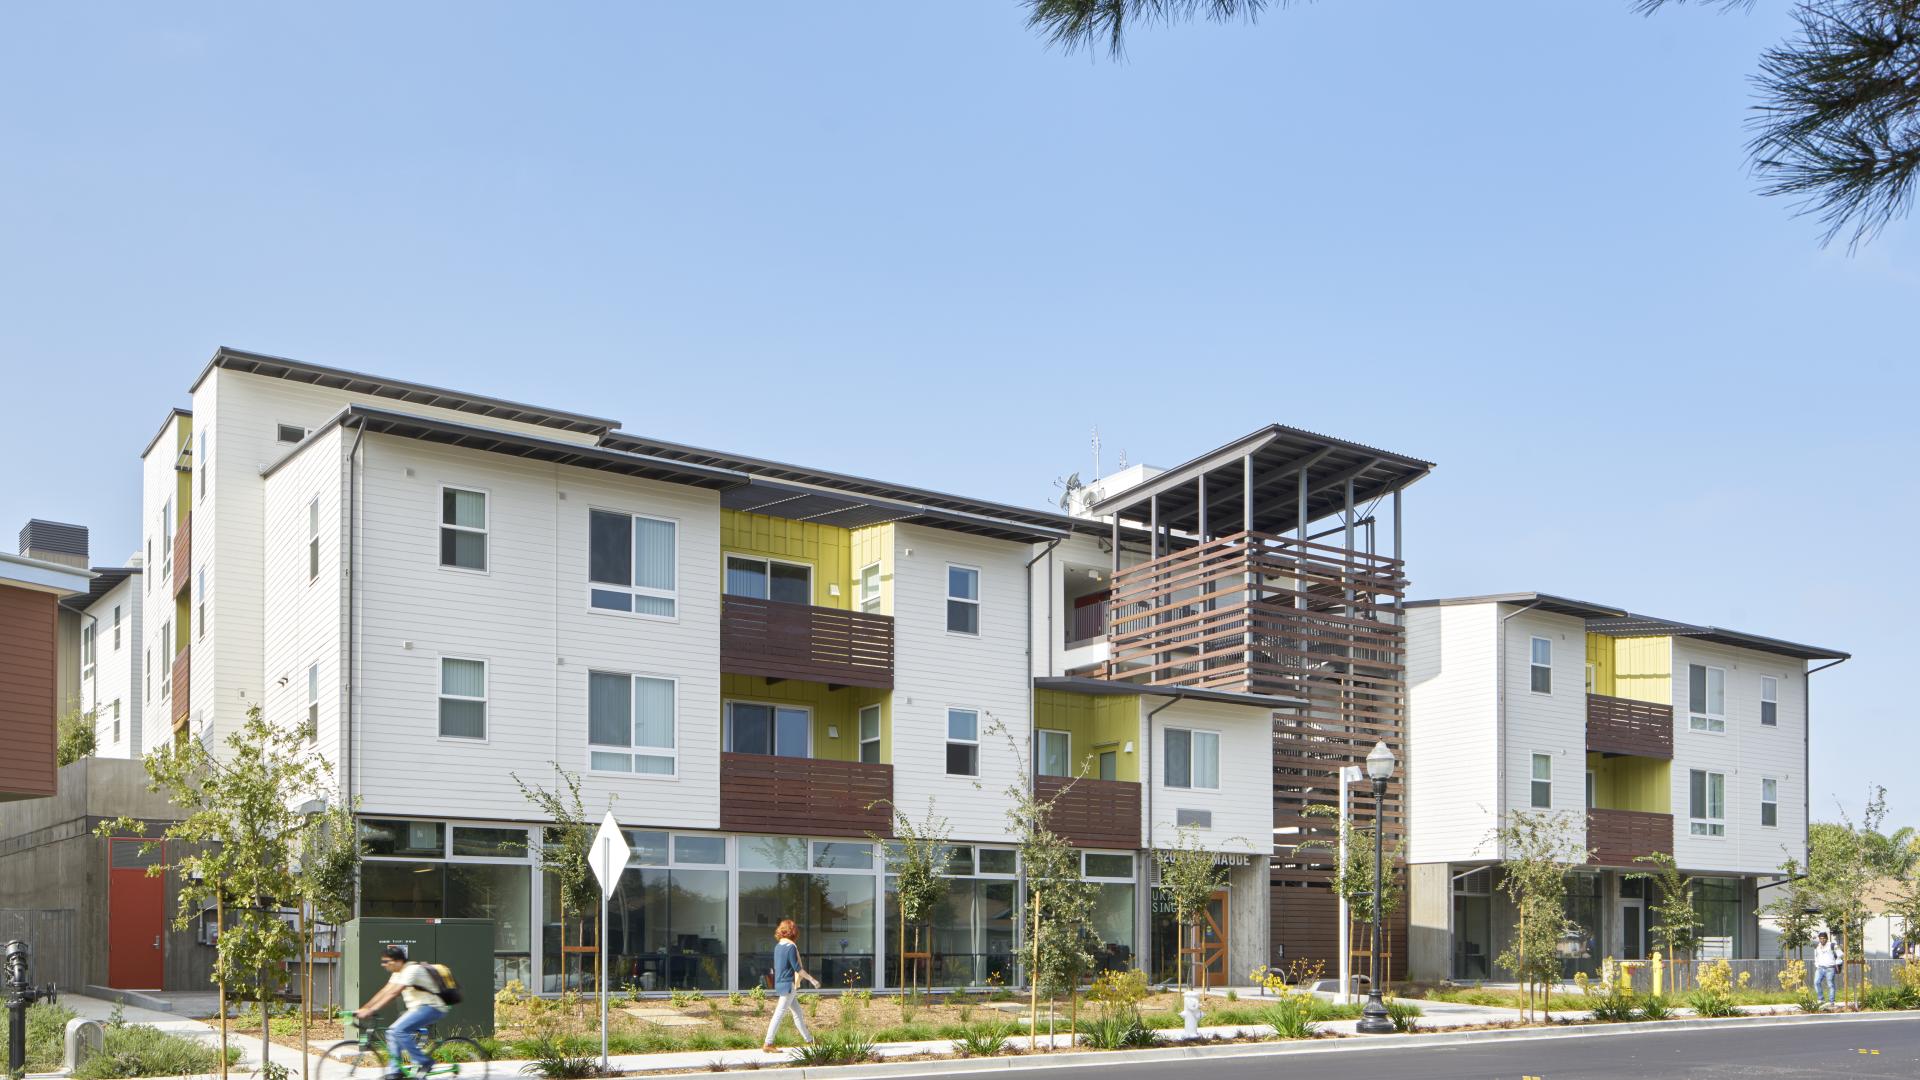 Street view of Onizuka Onizuka Crossing Family Housing in Sunnyvale, California